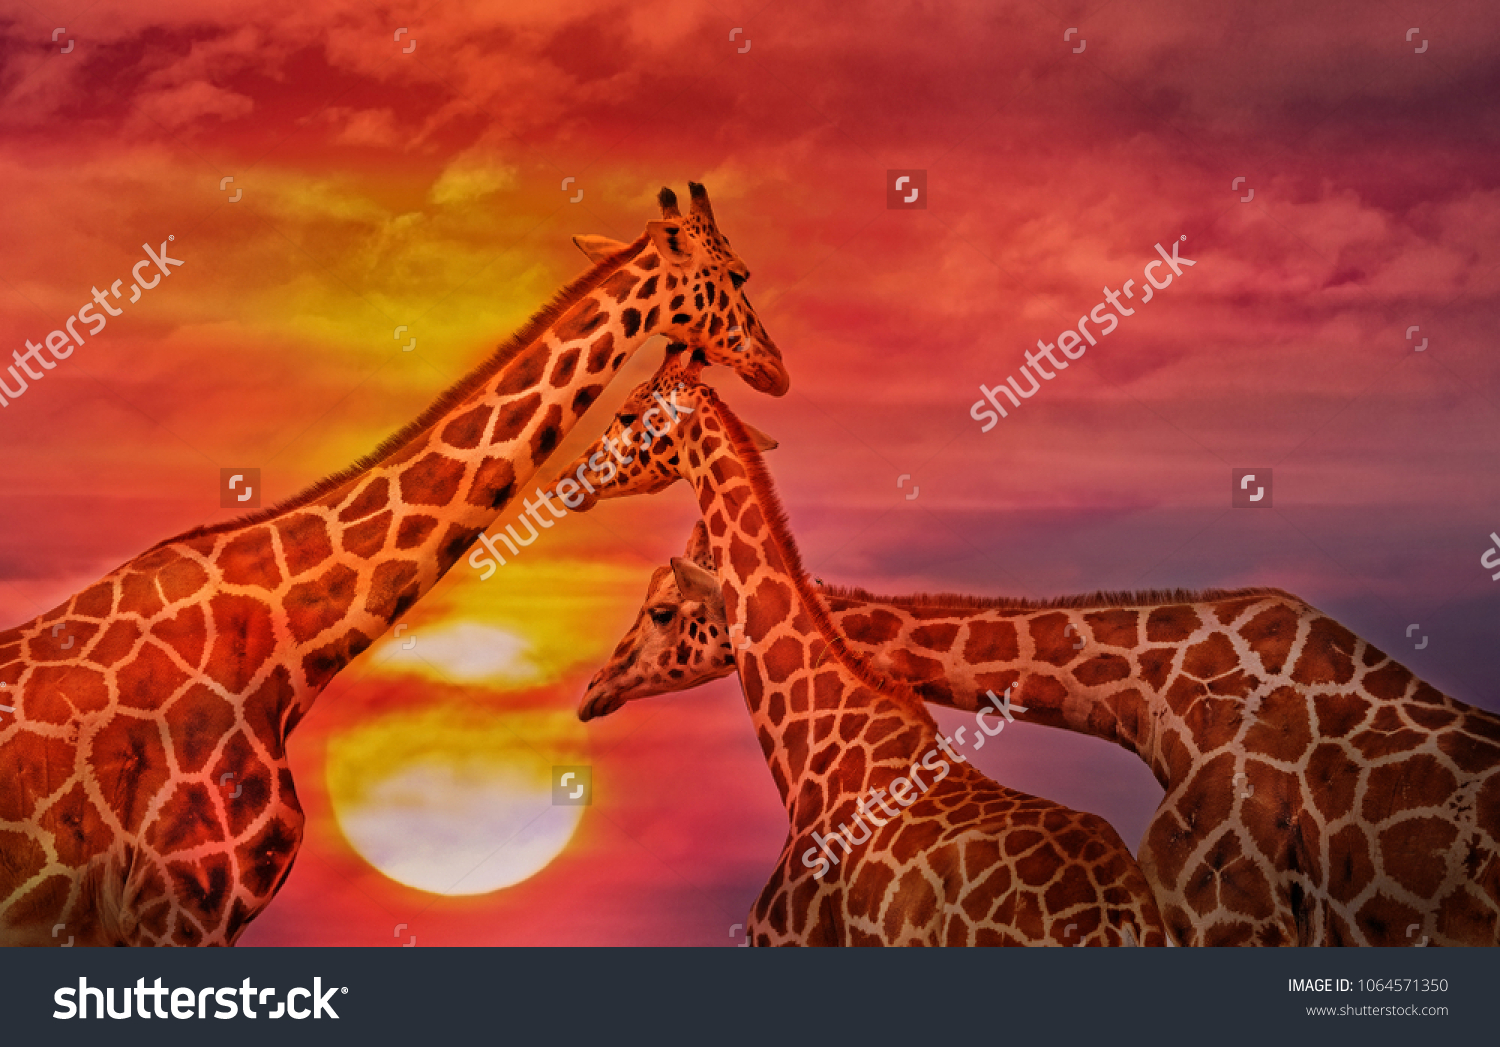 Giraffes against the sunset sky. African background #1064571350